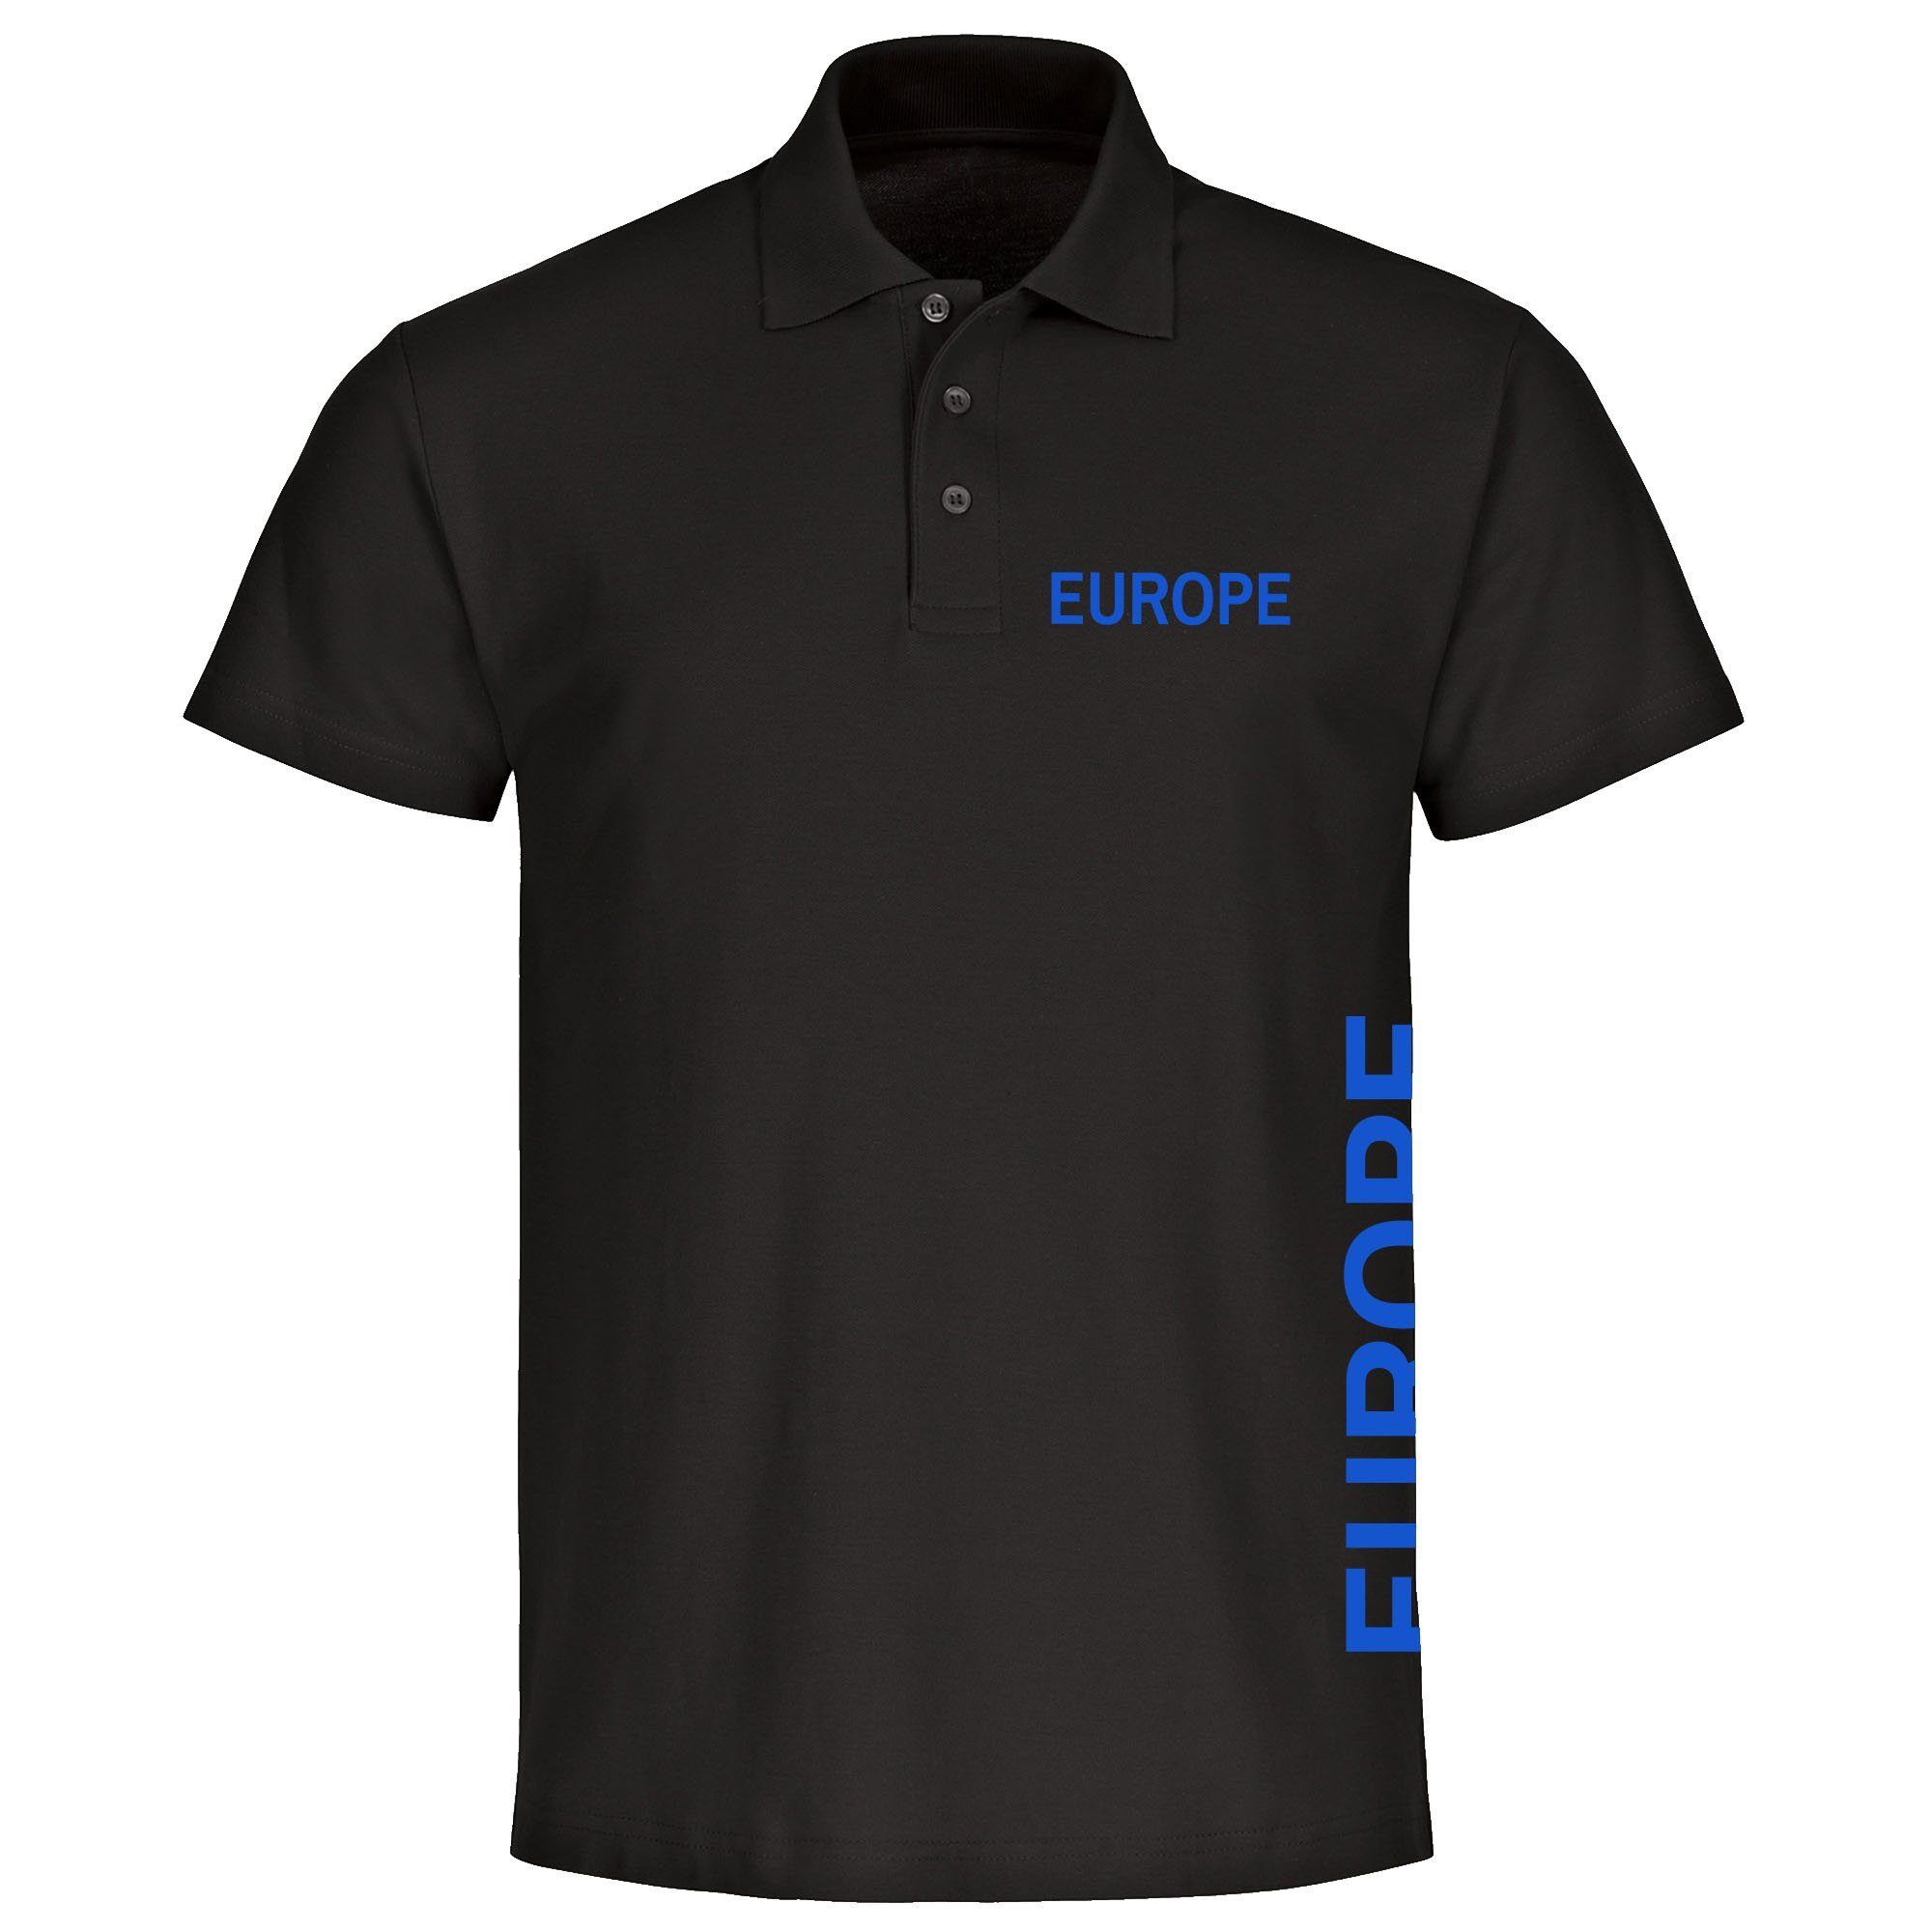 multifanshop Poloshirt Europe - Brust & Seite - Polo